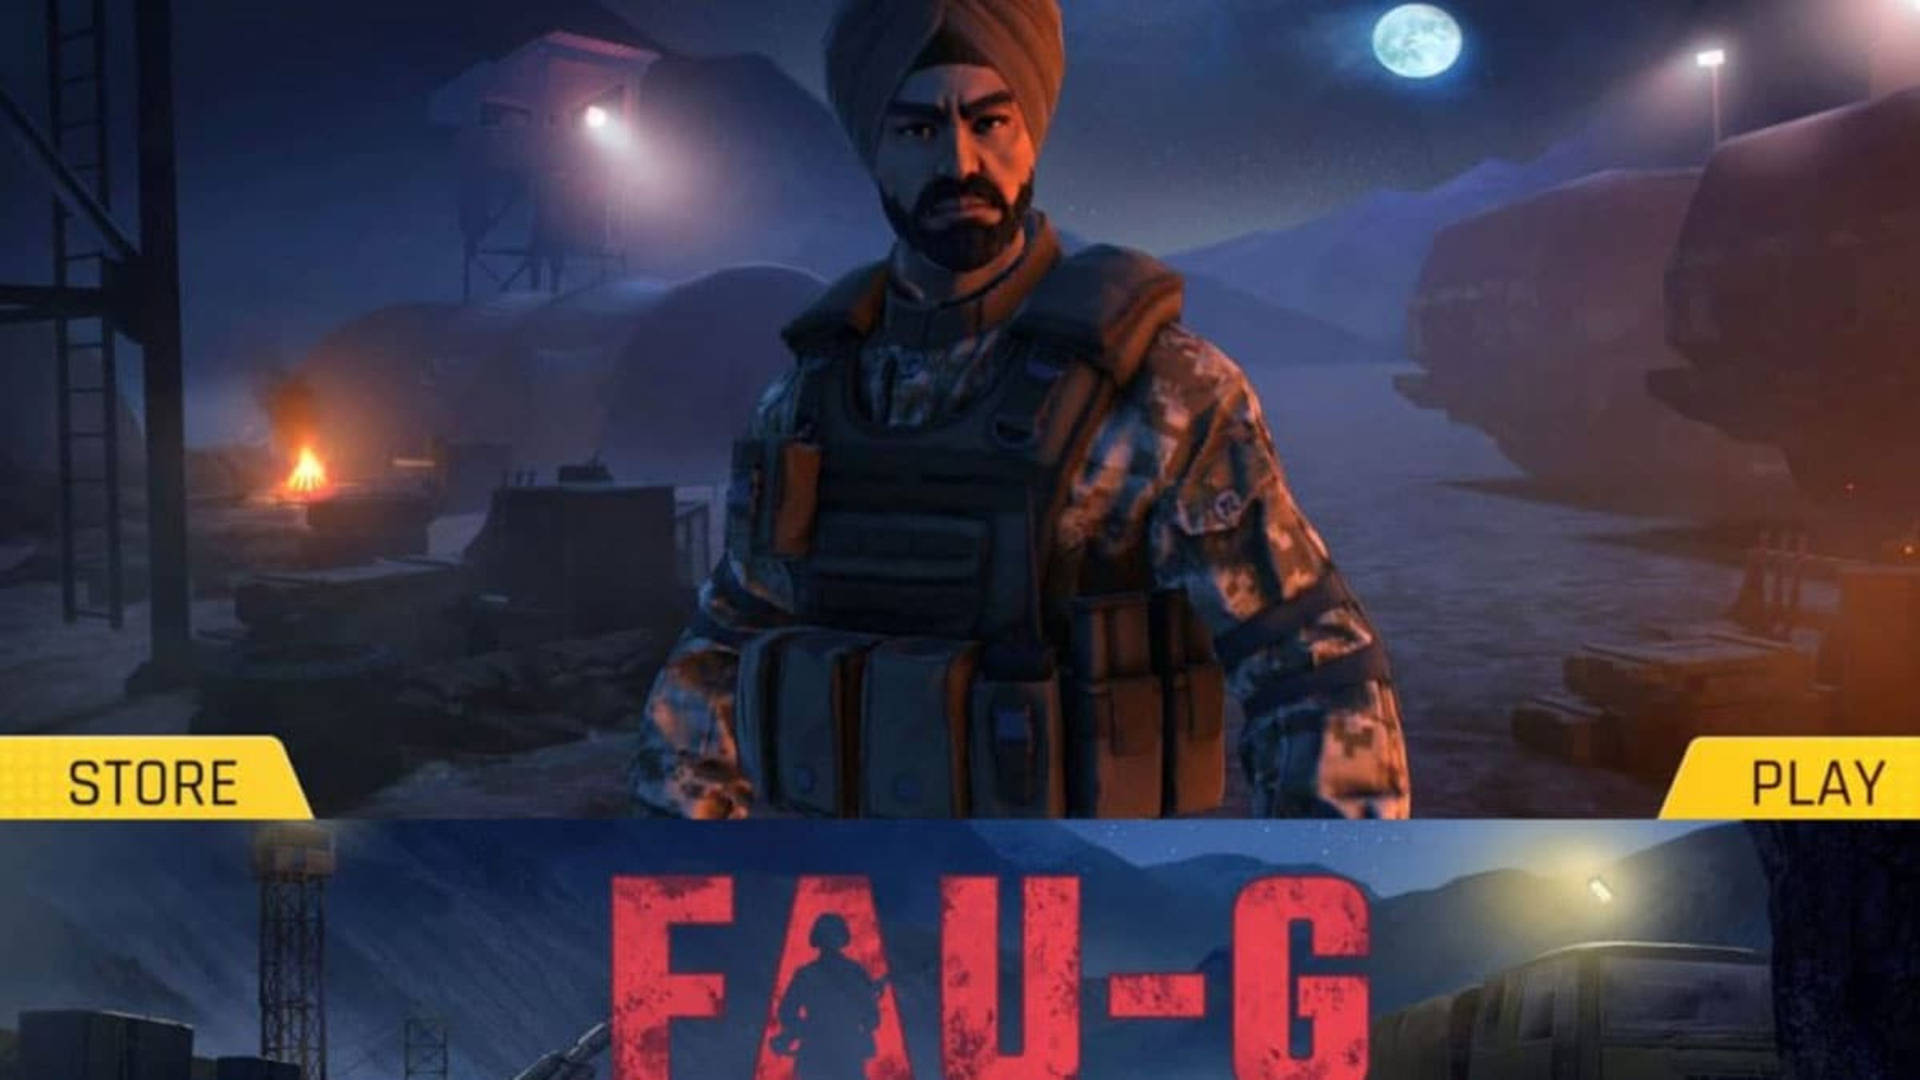 Commander Chillon Fau-g Game Screenshot Wallpaper